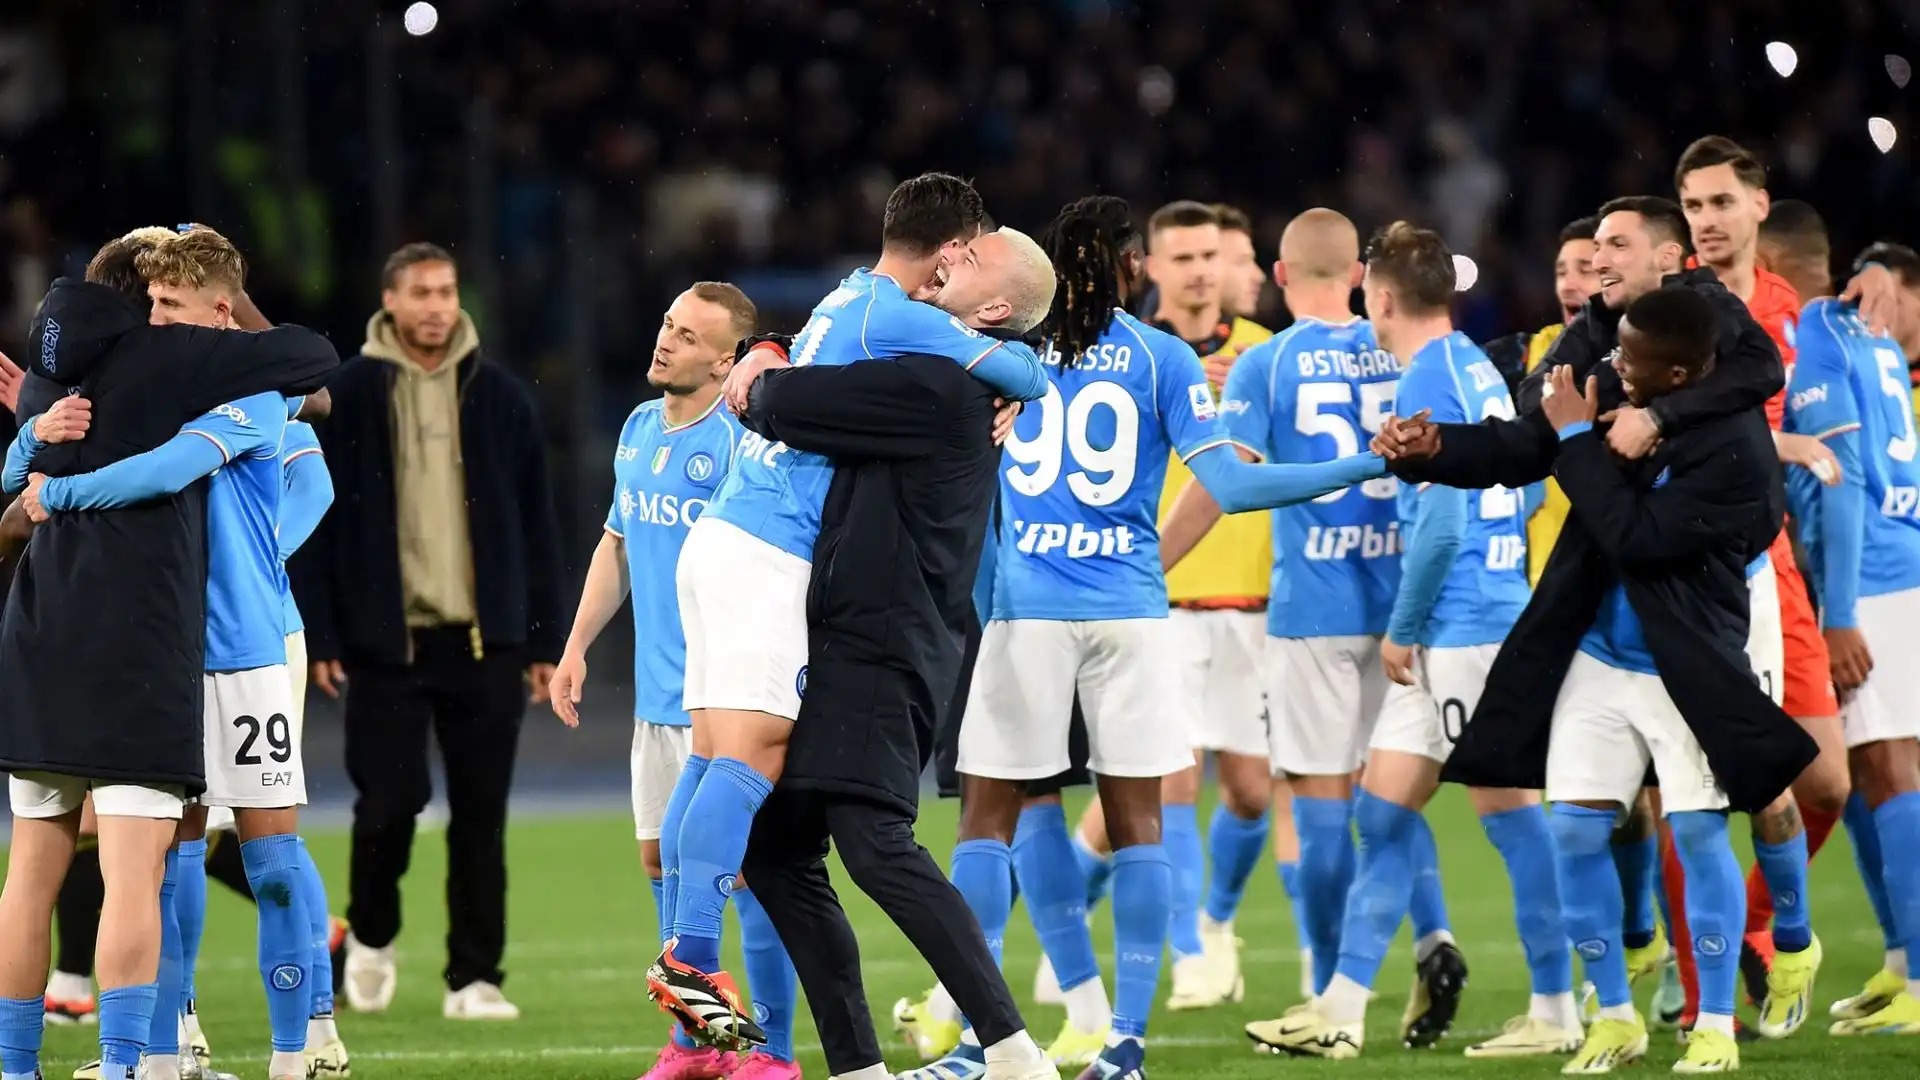 Il Napoli ha superato per 2-1 la Juventus al Maradona con i gol di Kvaratskhelia e Raspadori